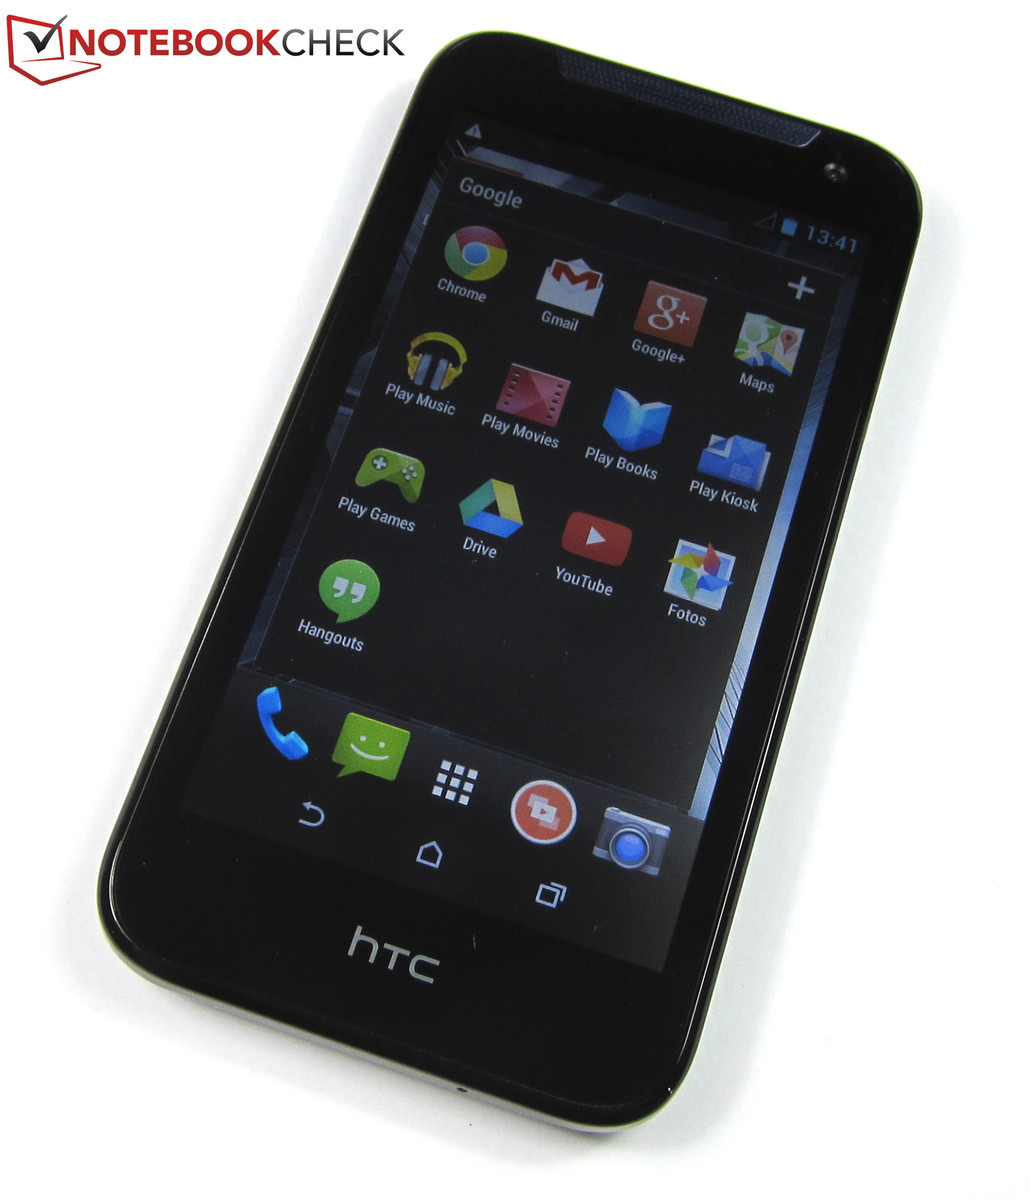 HTC Desire - NotebookCheck.net Reviews